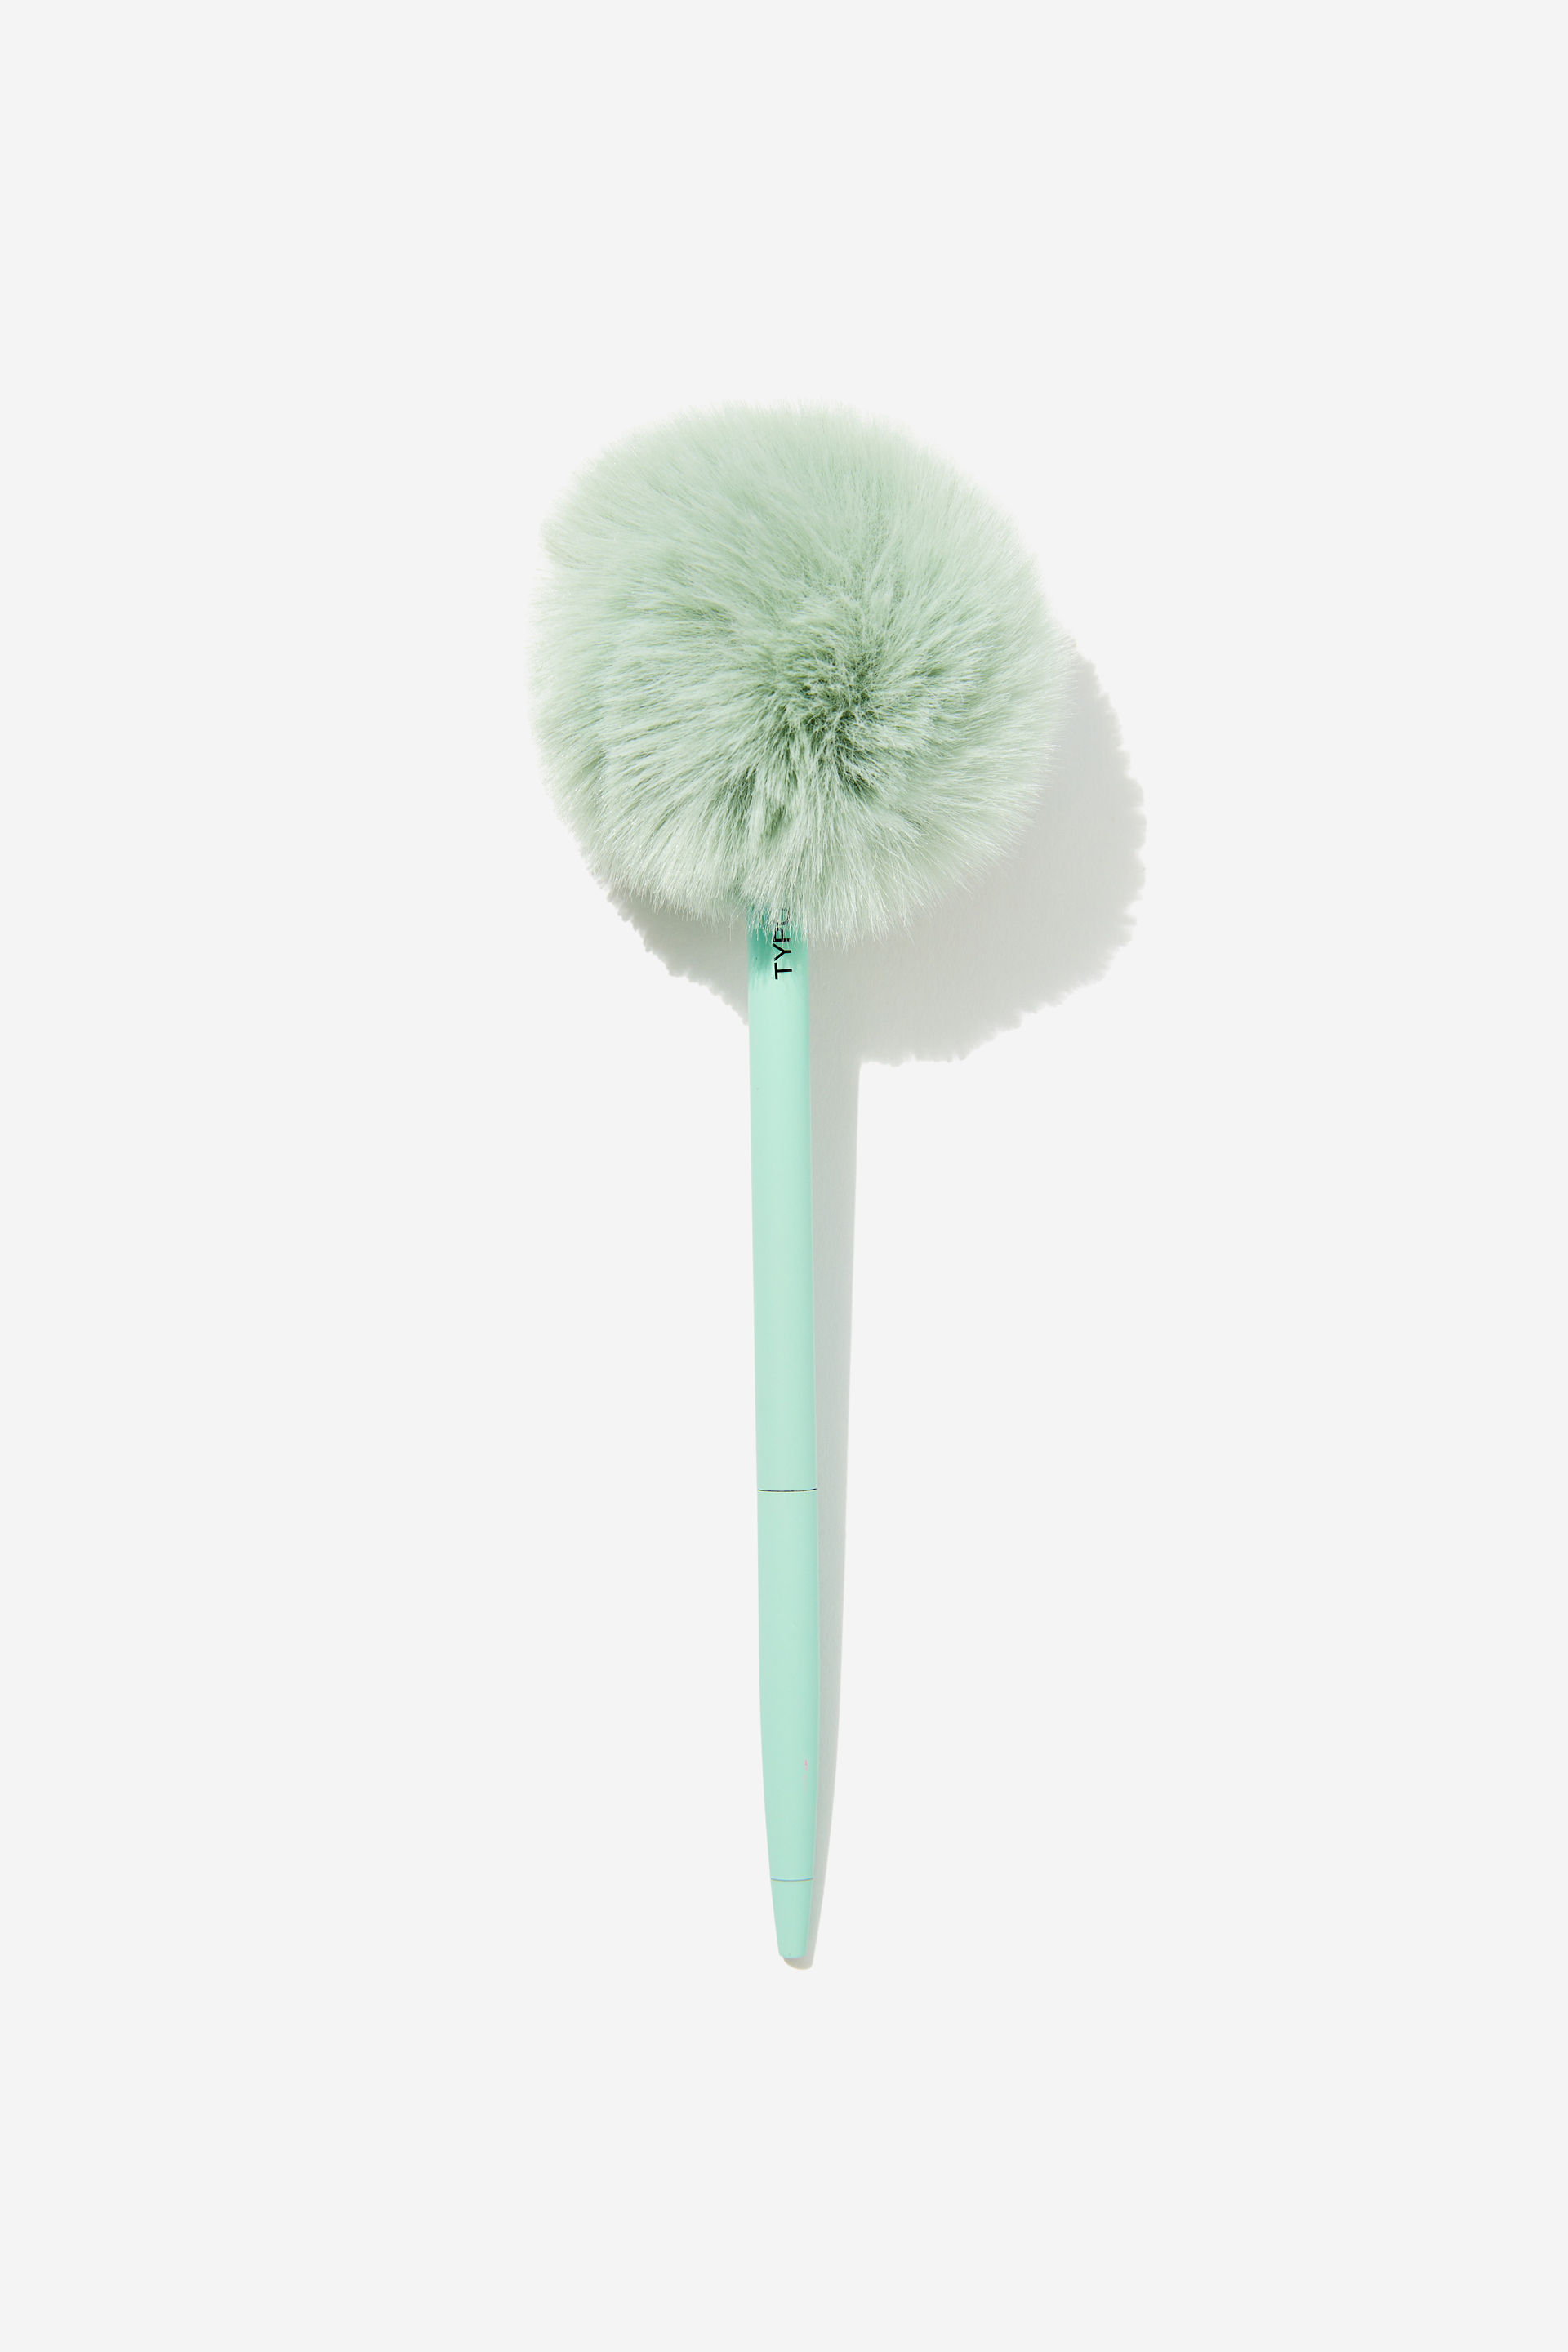 Typo - Fluffy Pen - Smoke green